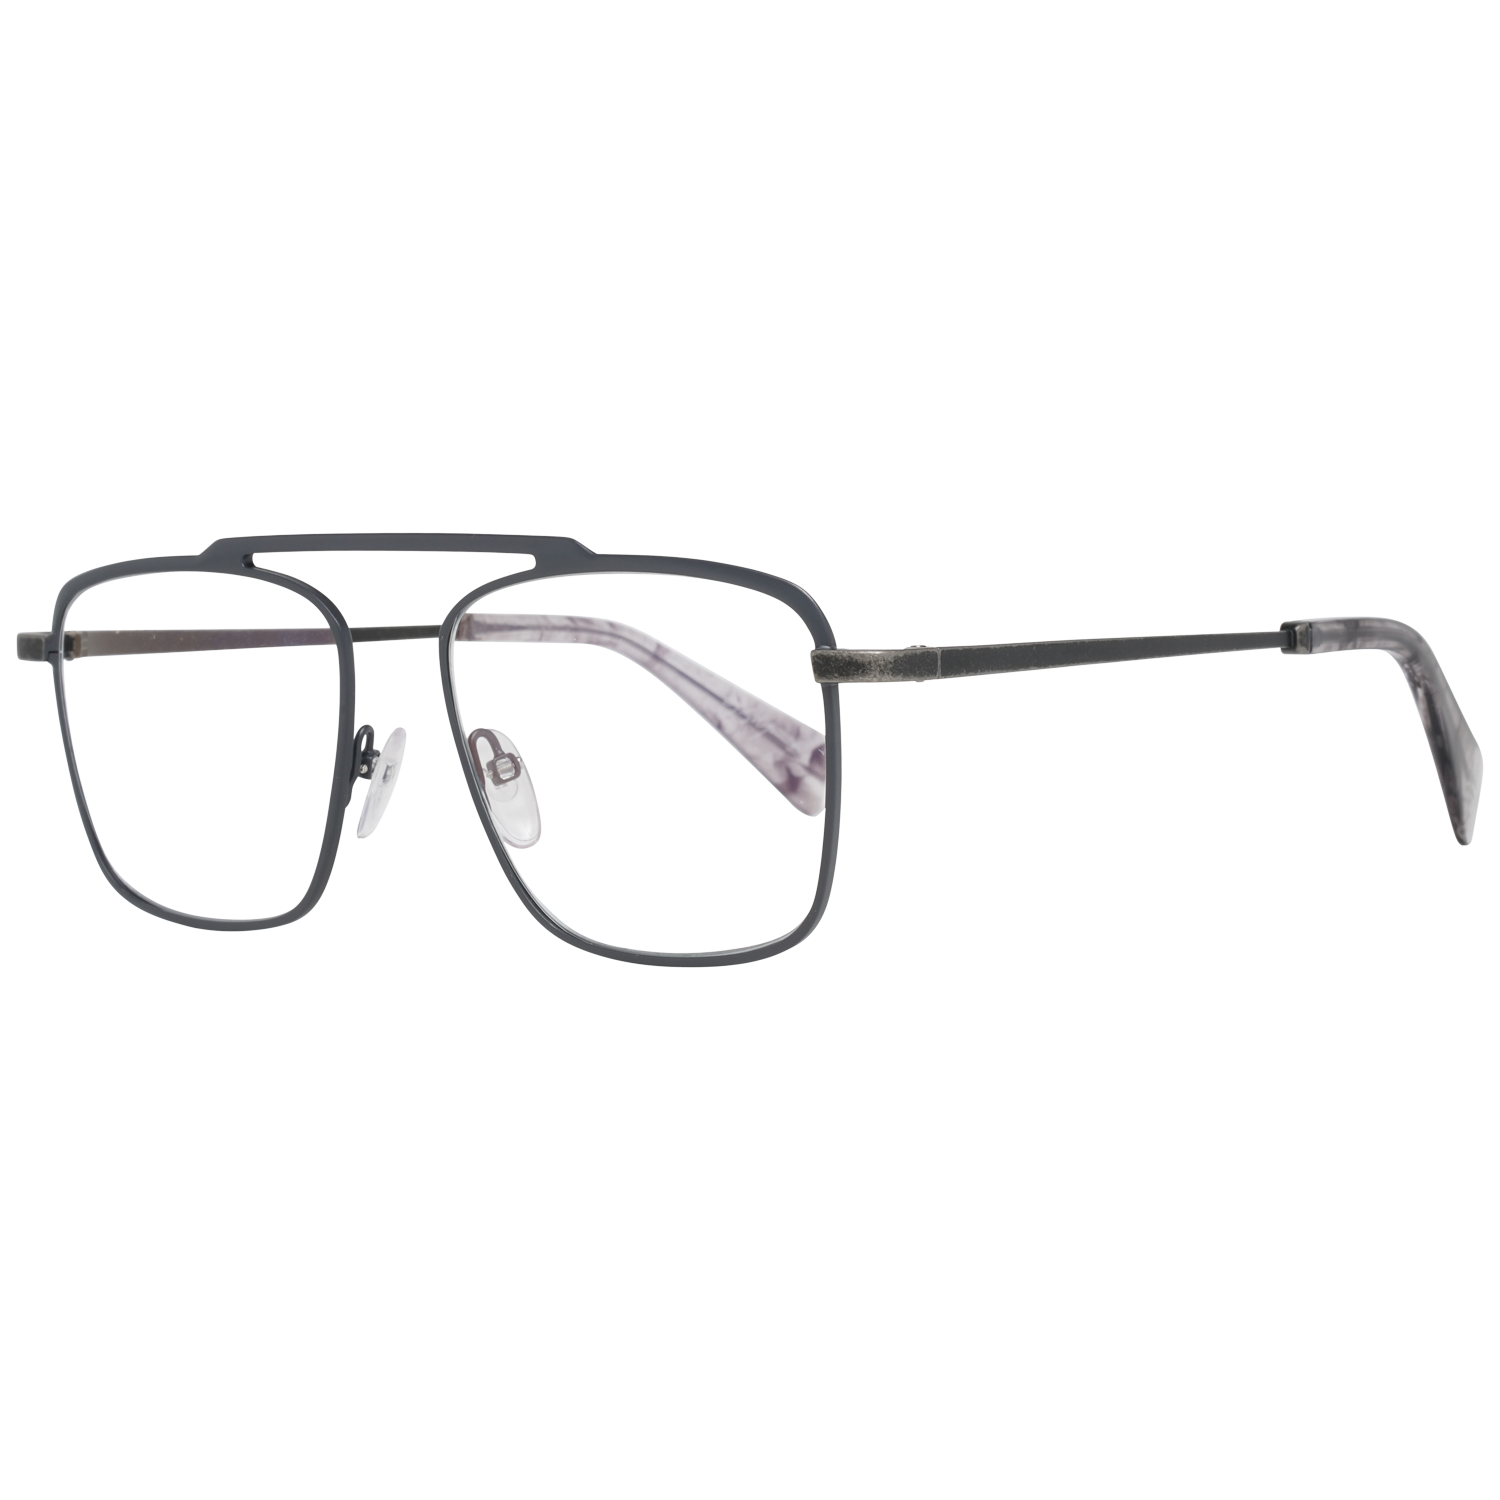 Yohji Yamamoto Optical Frame YY3017 908 53 Grey